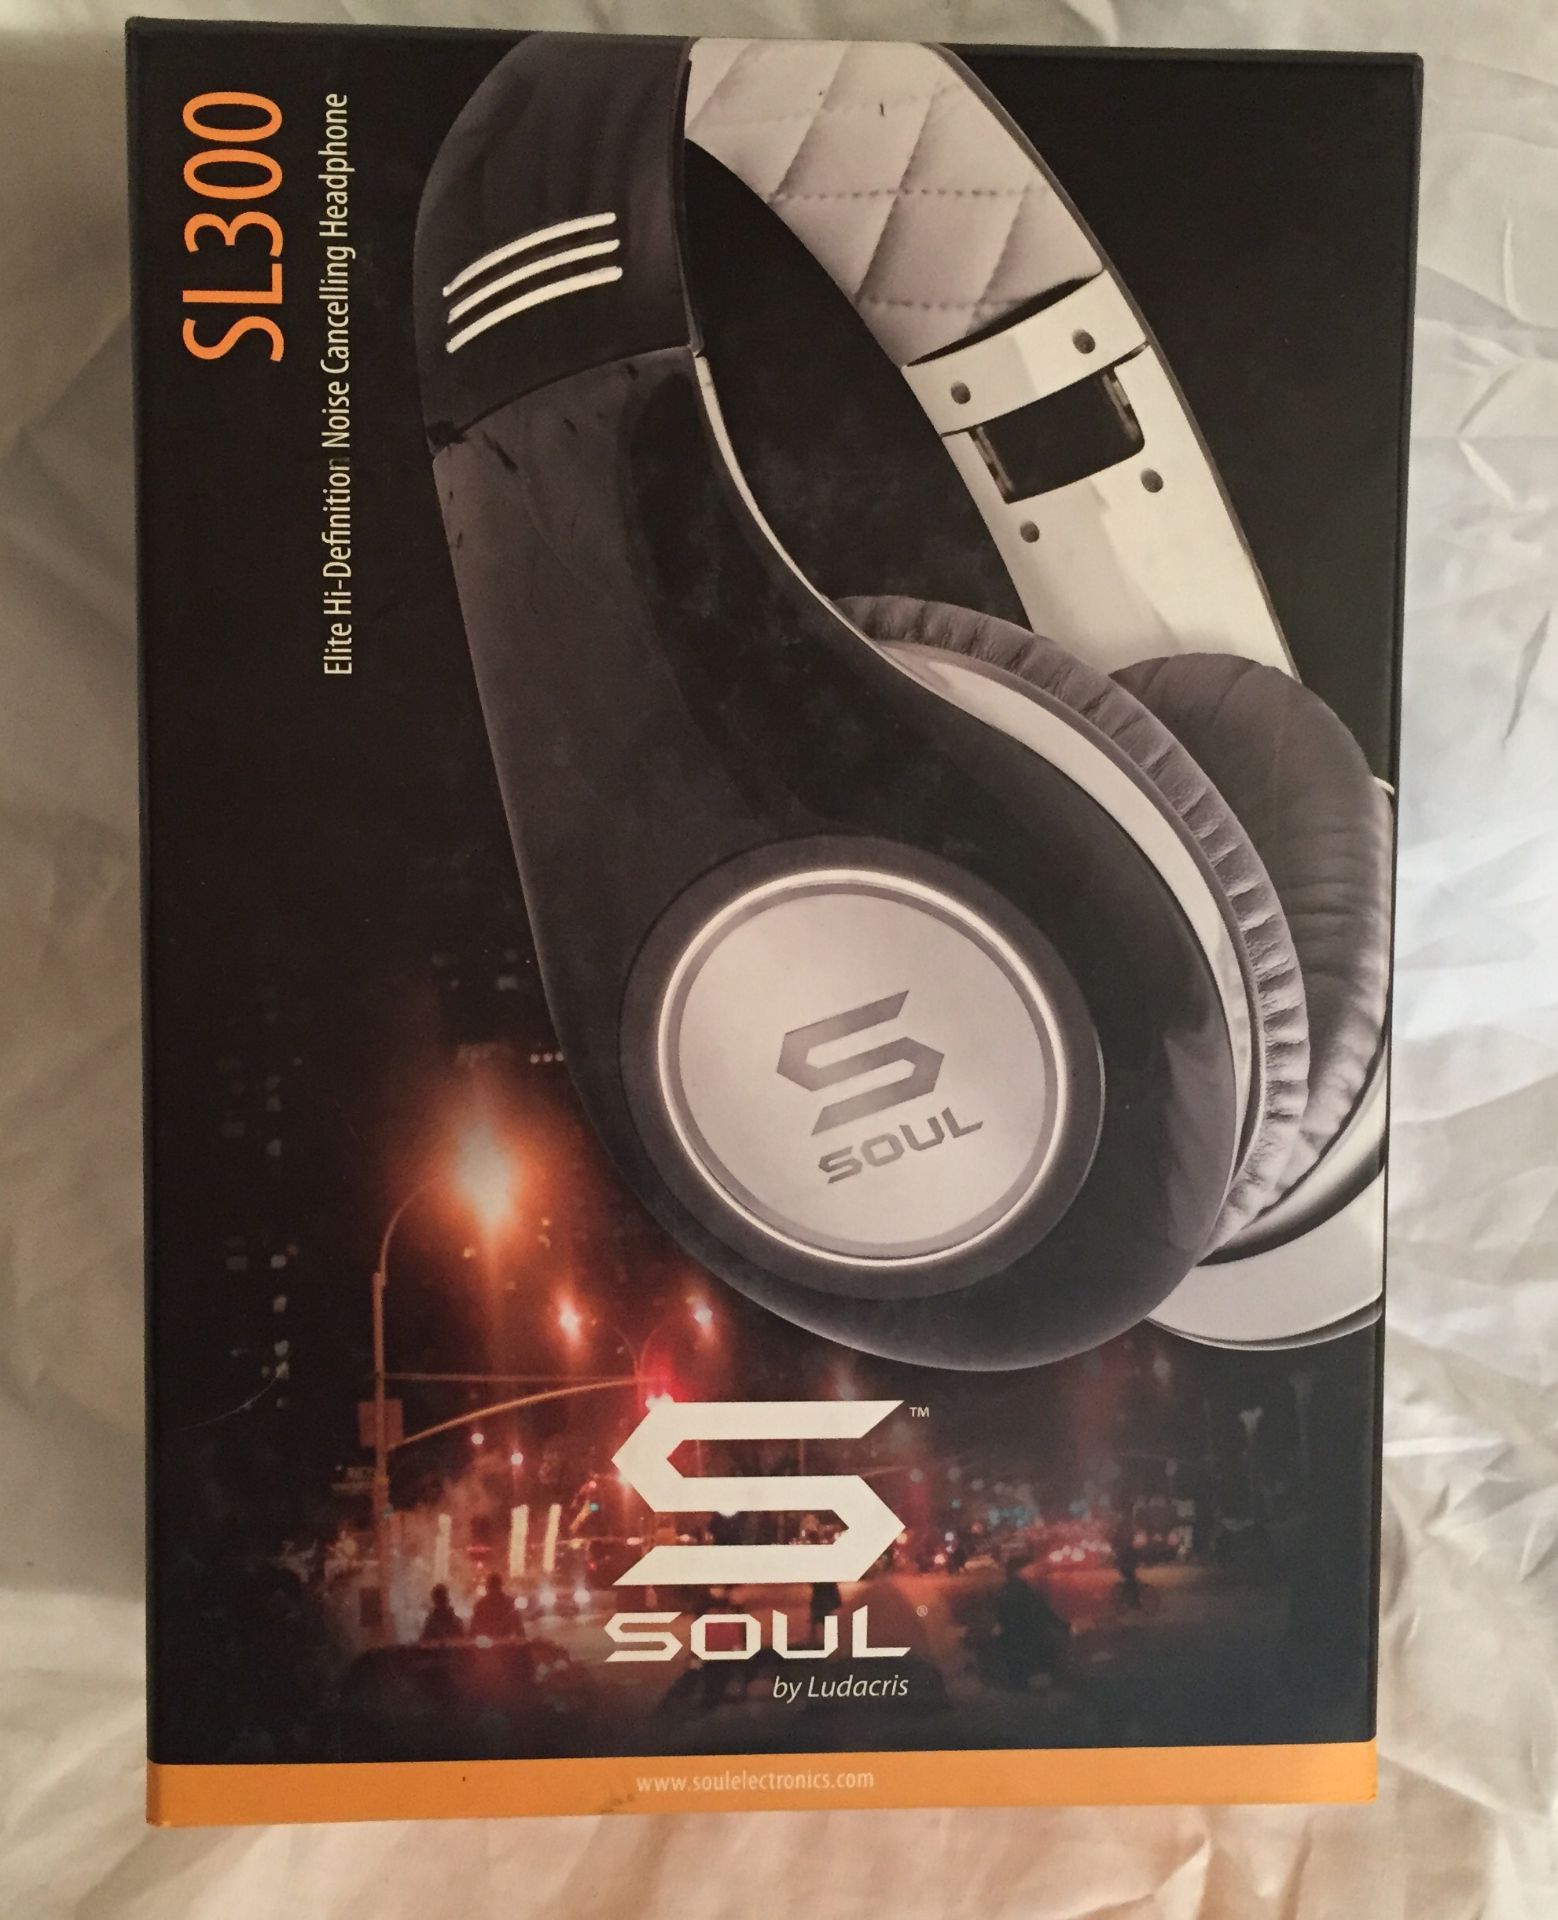 SOUL by Ludacris SL300WB HD Noise Canceling
Headphones - Black/White_ RRP £214.99 _
Unclaimed_